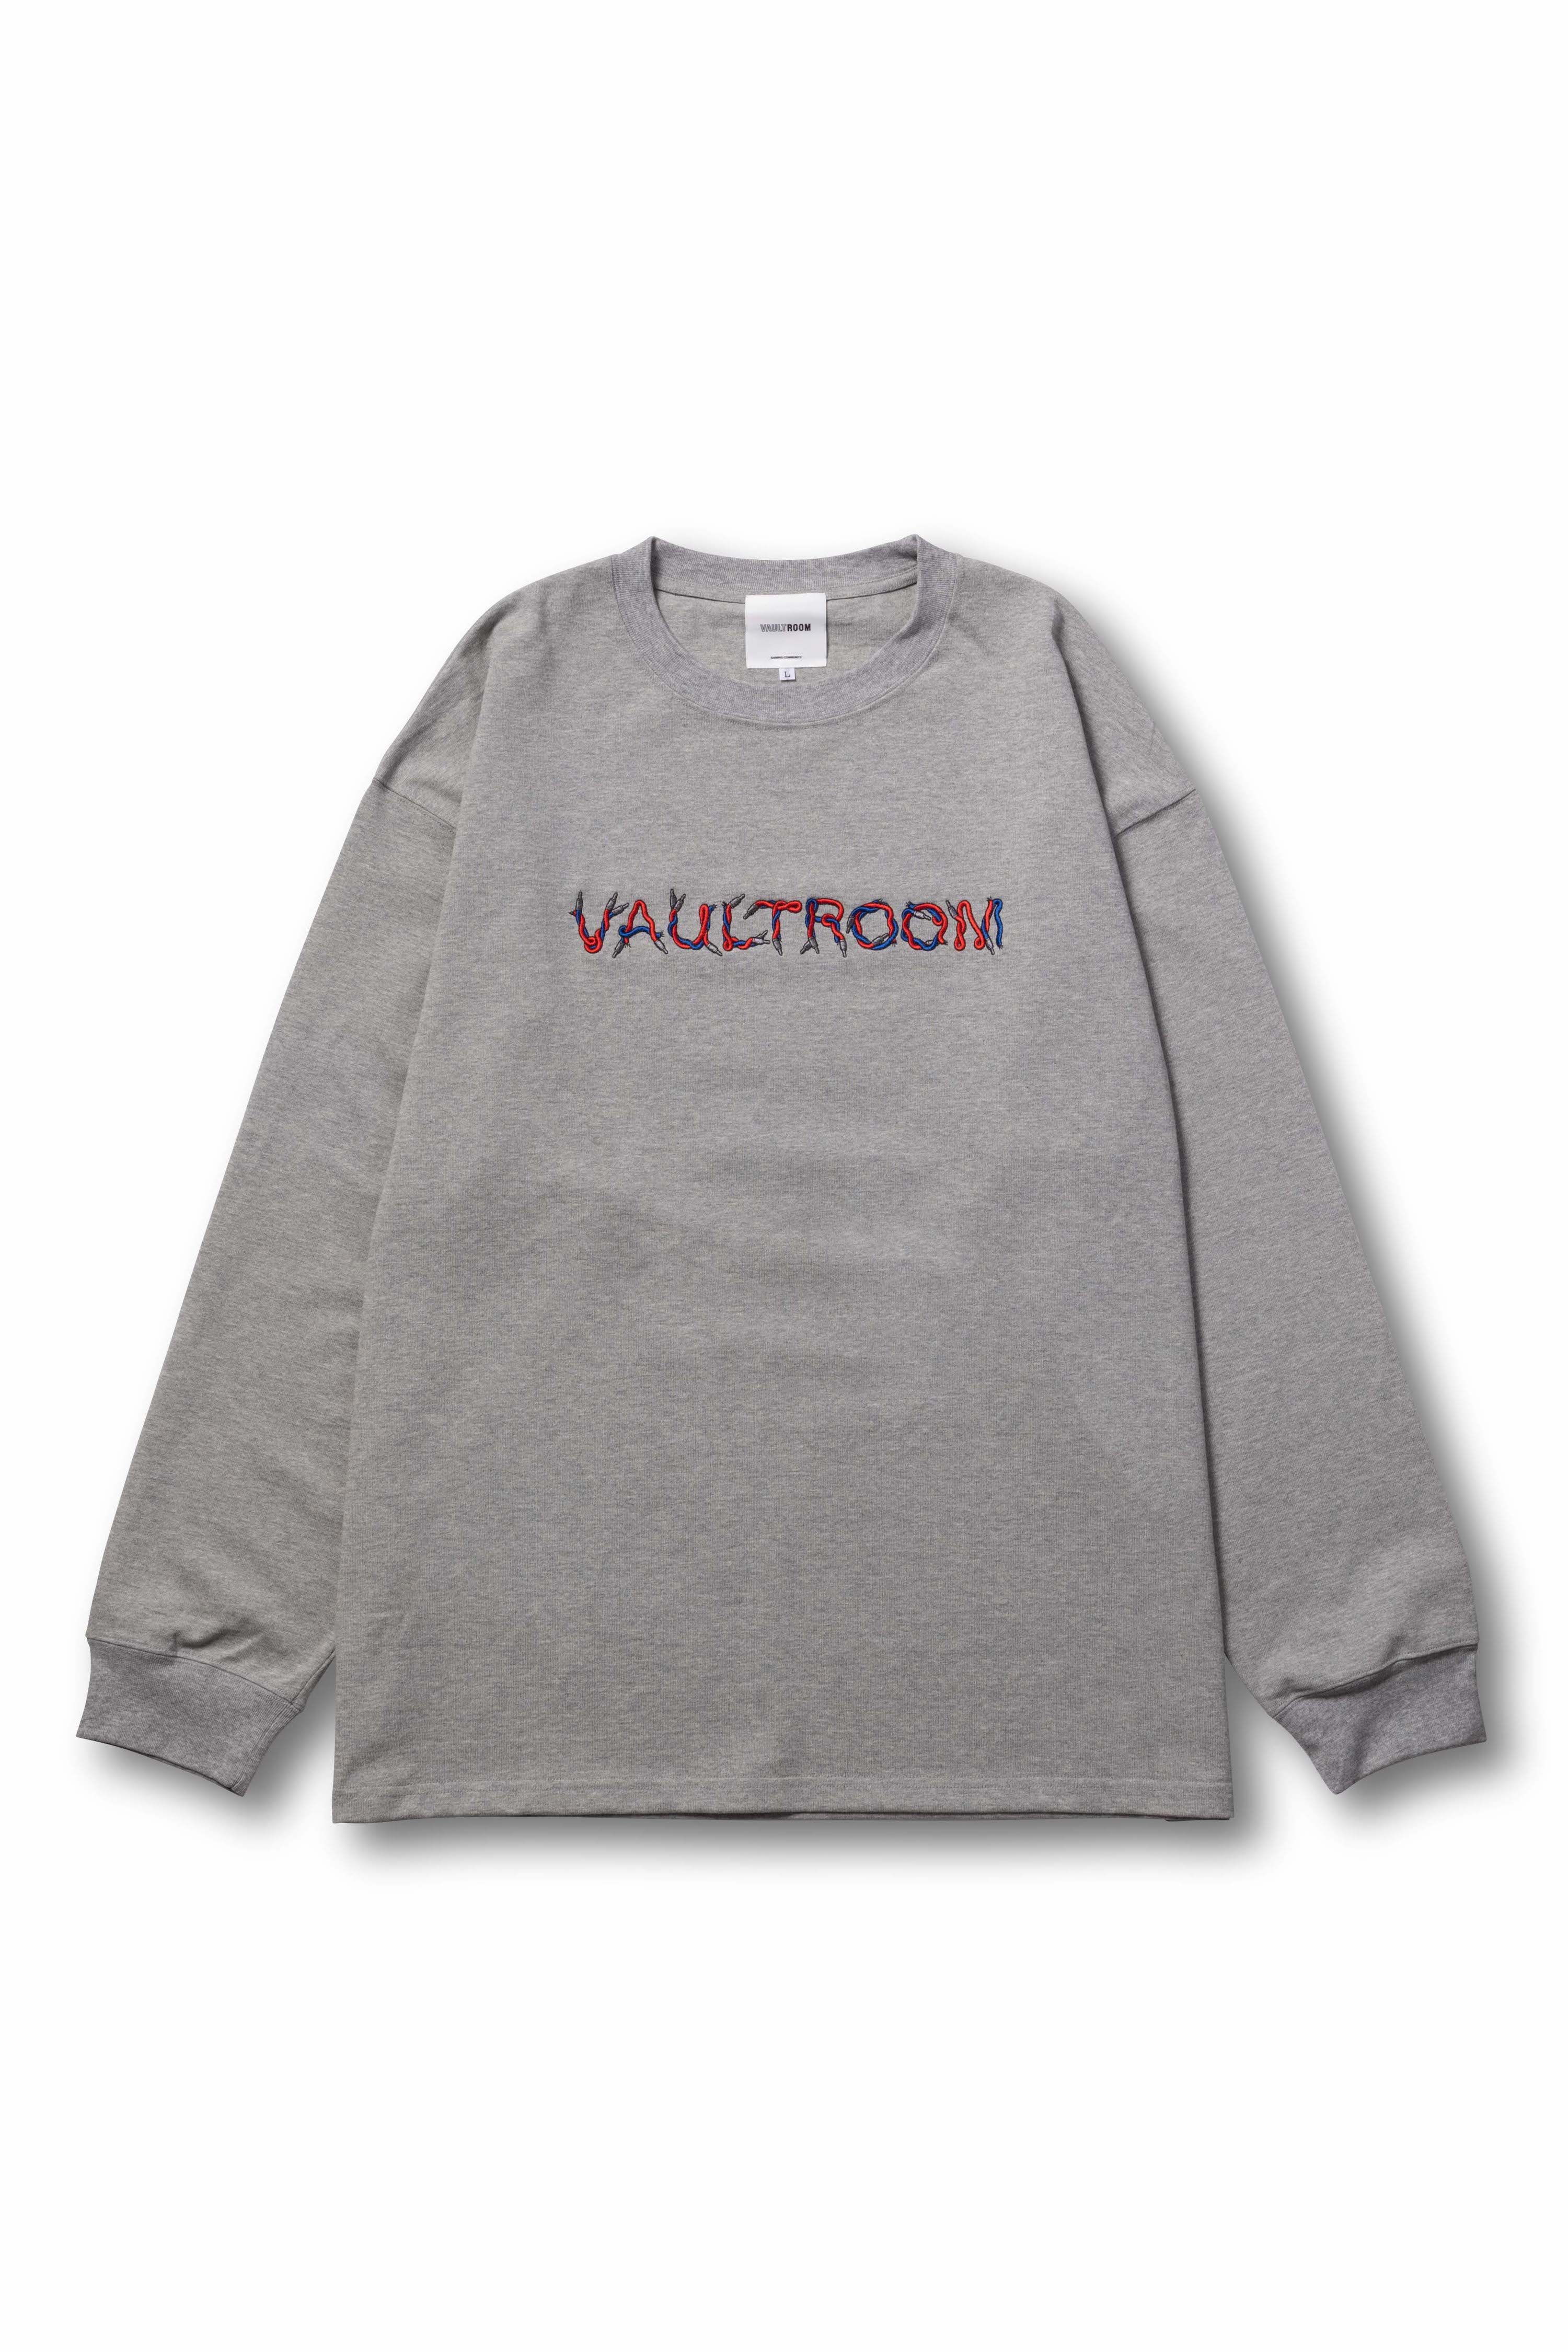 VR × AKARIN BIG L S TEE BLK vaultroom - Tシャツ